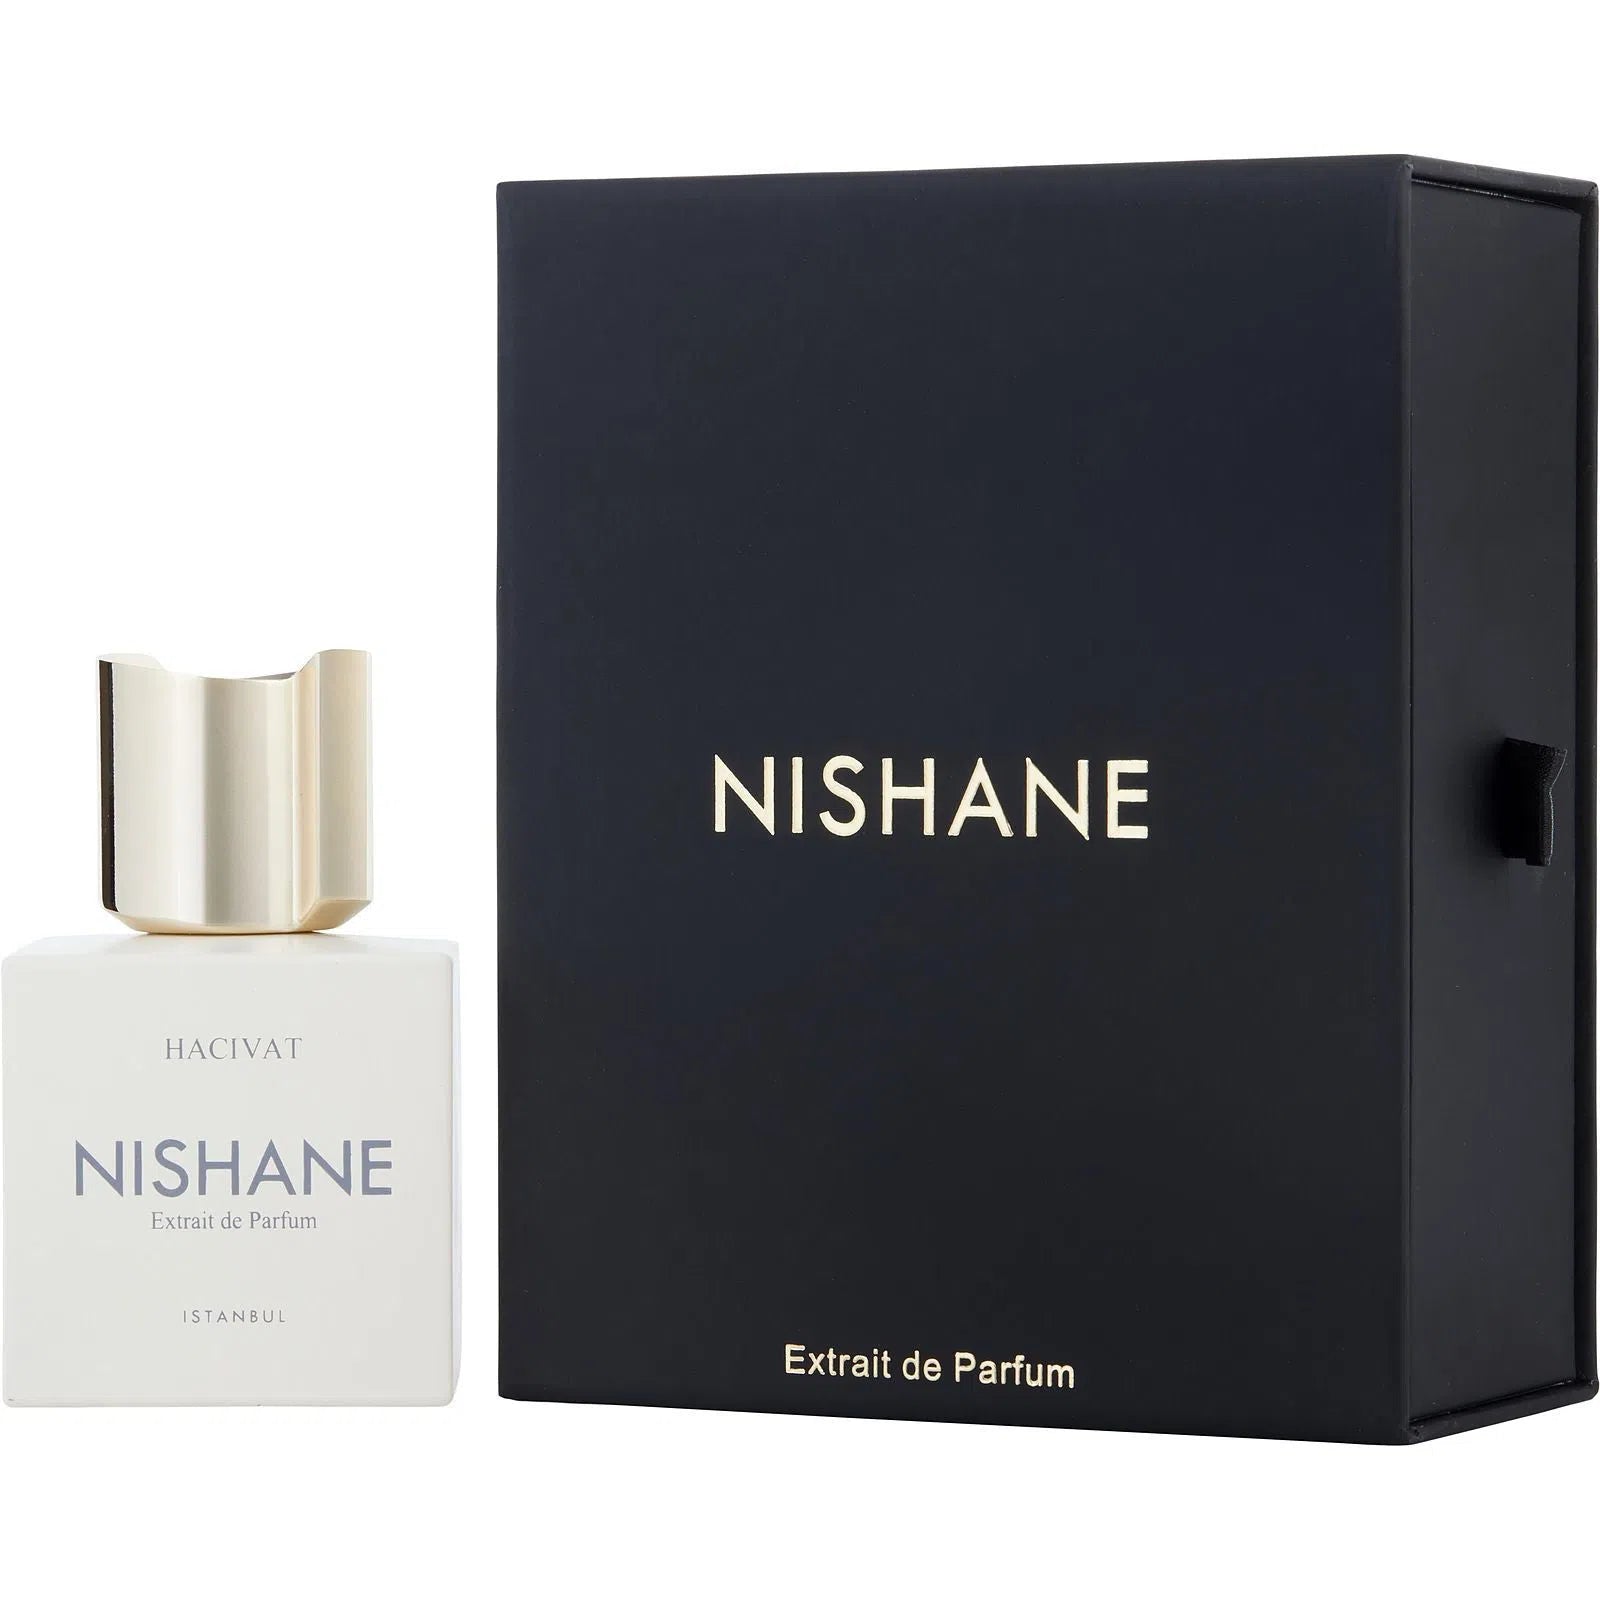 Perfume Nishane Hacivat Extrait de Parfum (U) / 50 ml - 8681008055388- Prive Perfumes Honduras